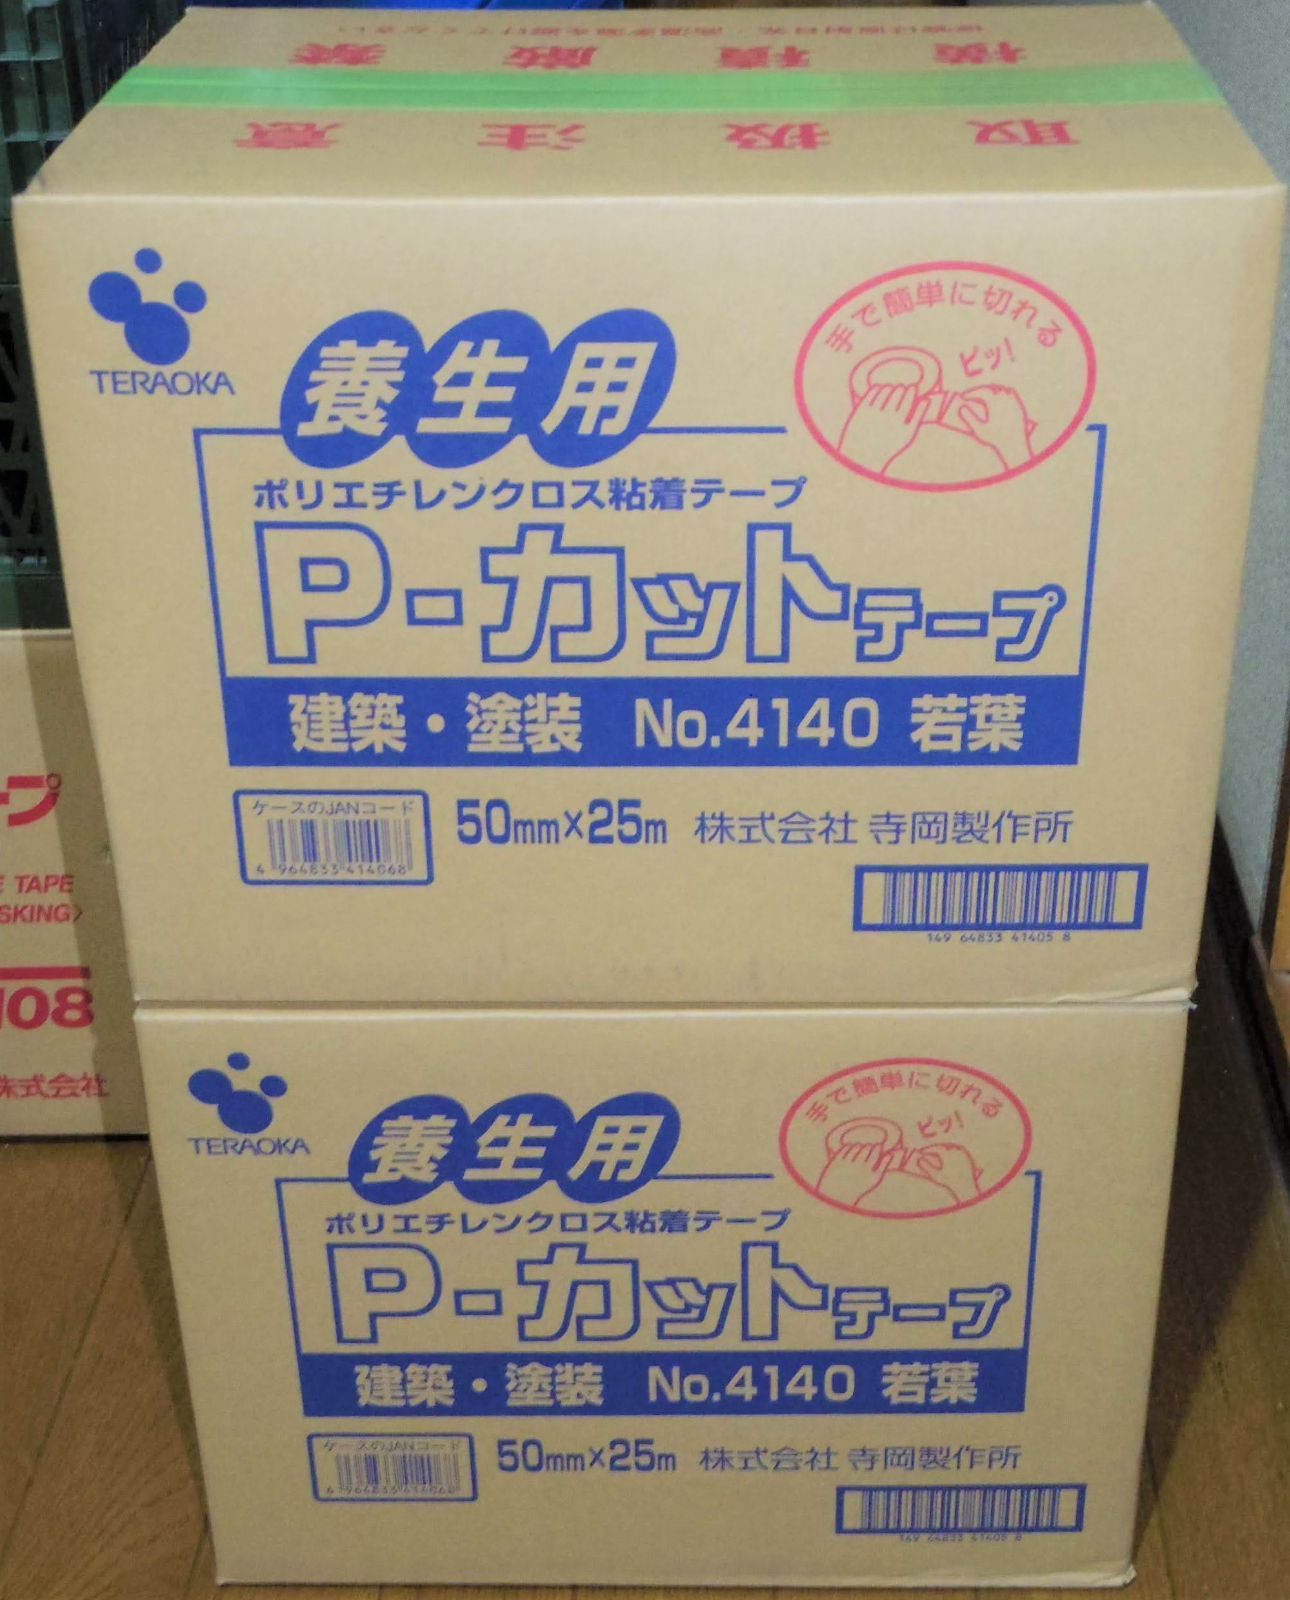 TERAOKA(寺岡) P-カットテープ 若葉 50mm×25M 30巻入 No.4140 養生テープ・マスキングテープ - 2